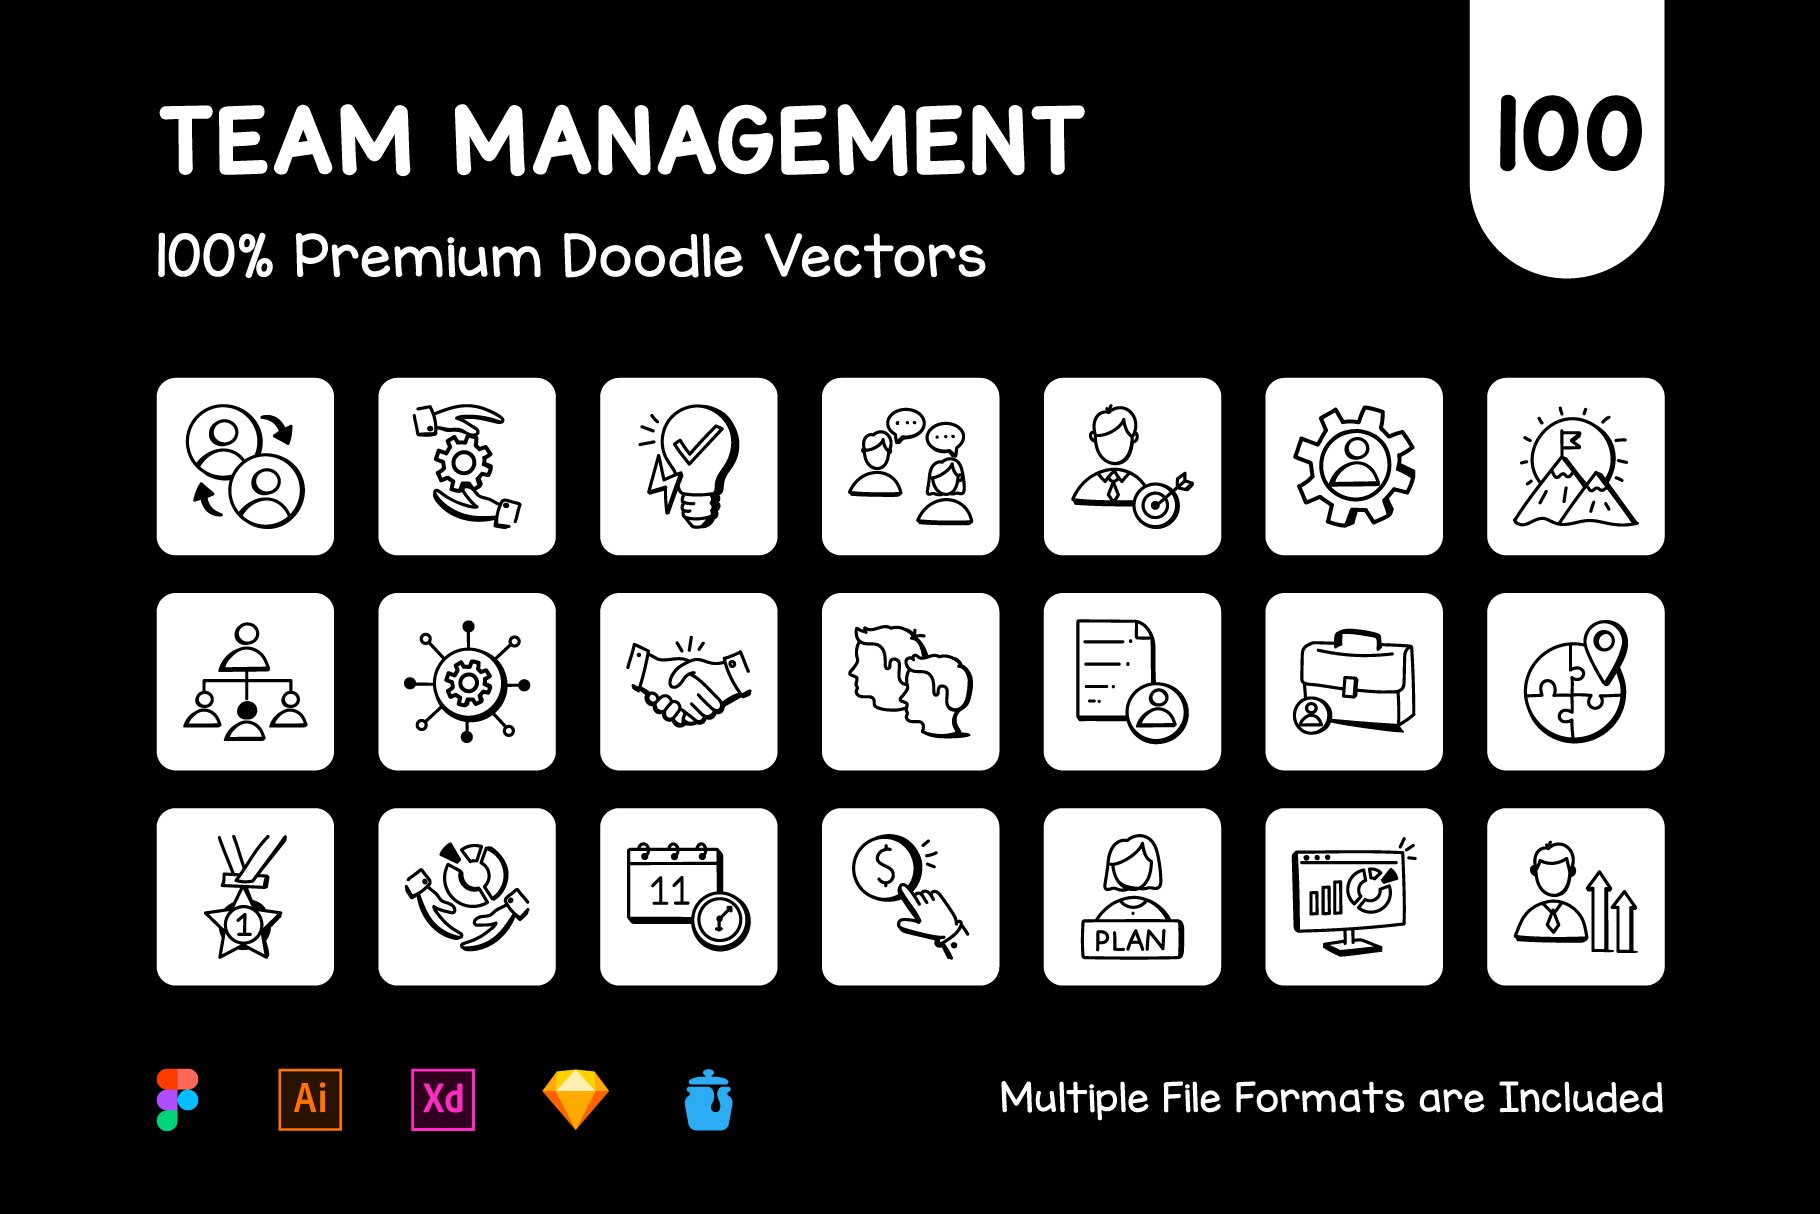 100 Management Team Icon Vectors preview image.